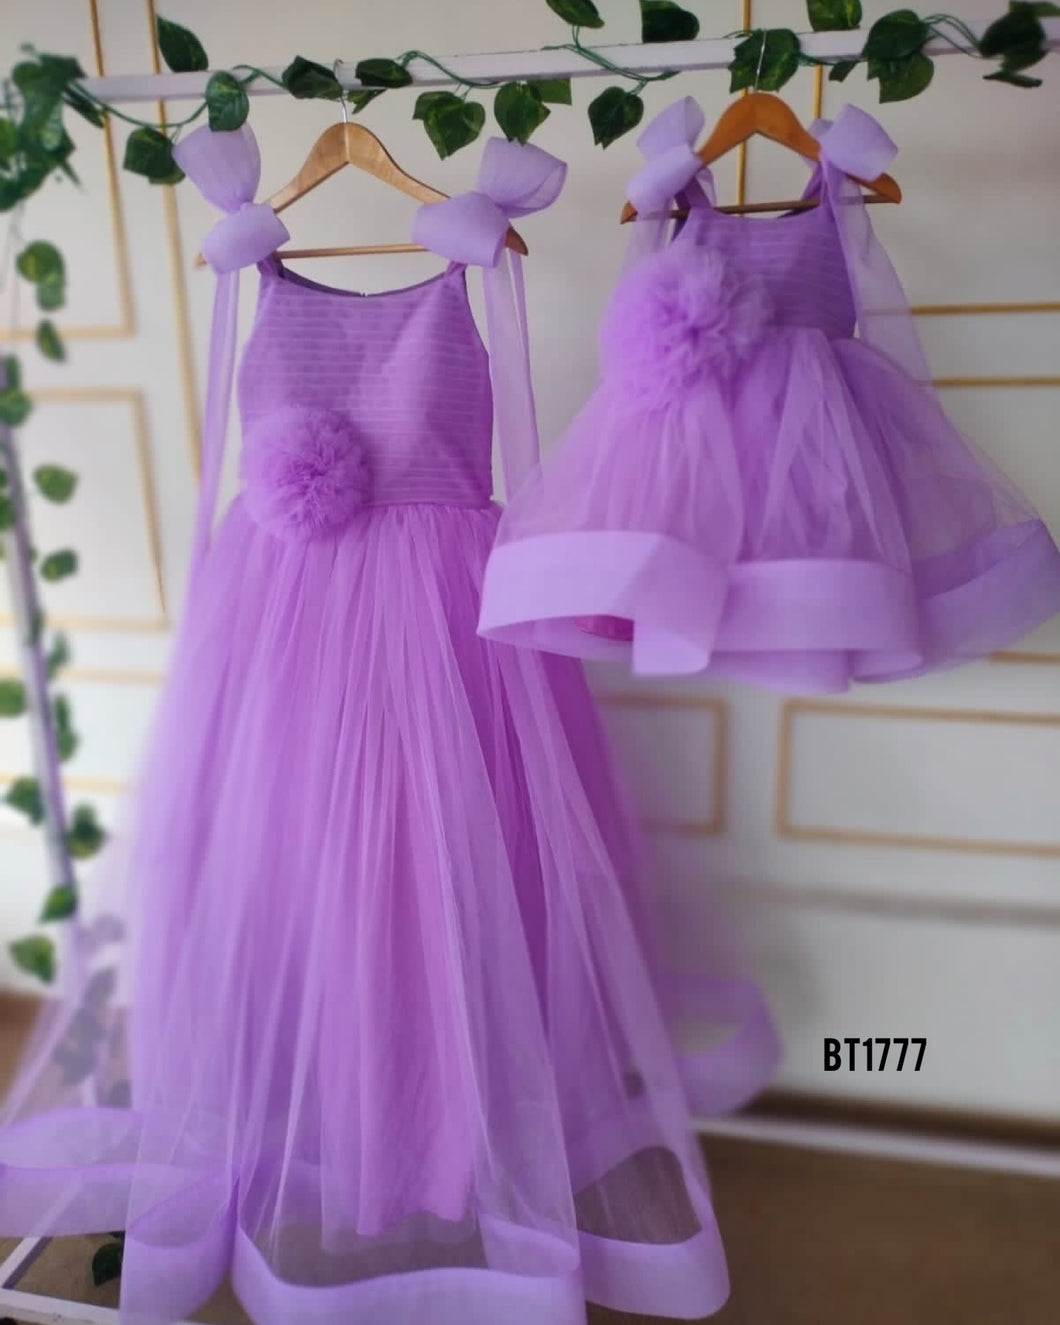 BT1777 Lavender Love: Mother & Child Matching Dresses